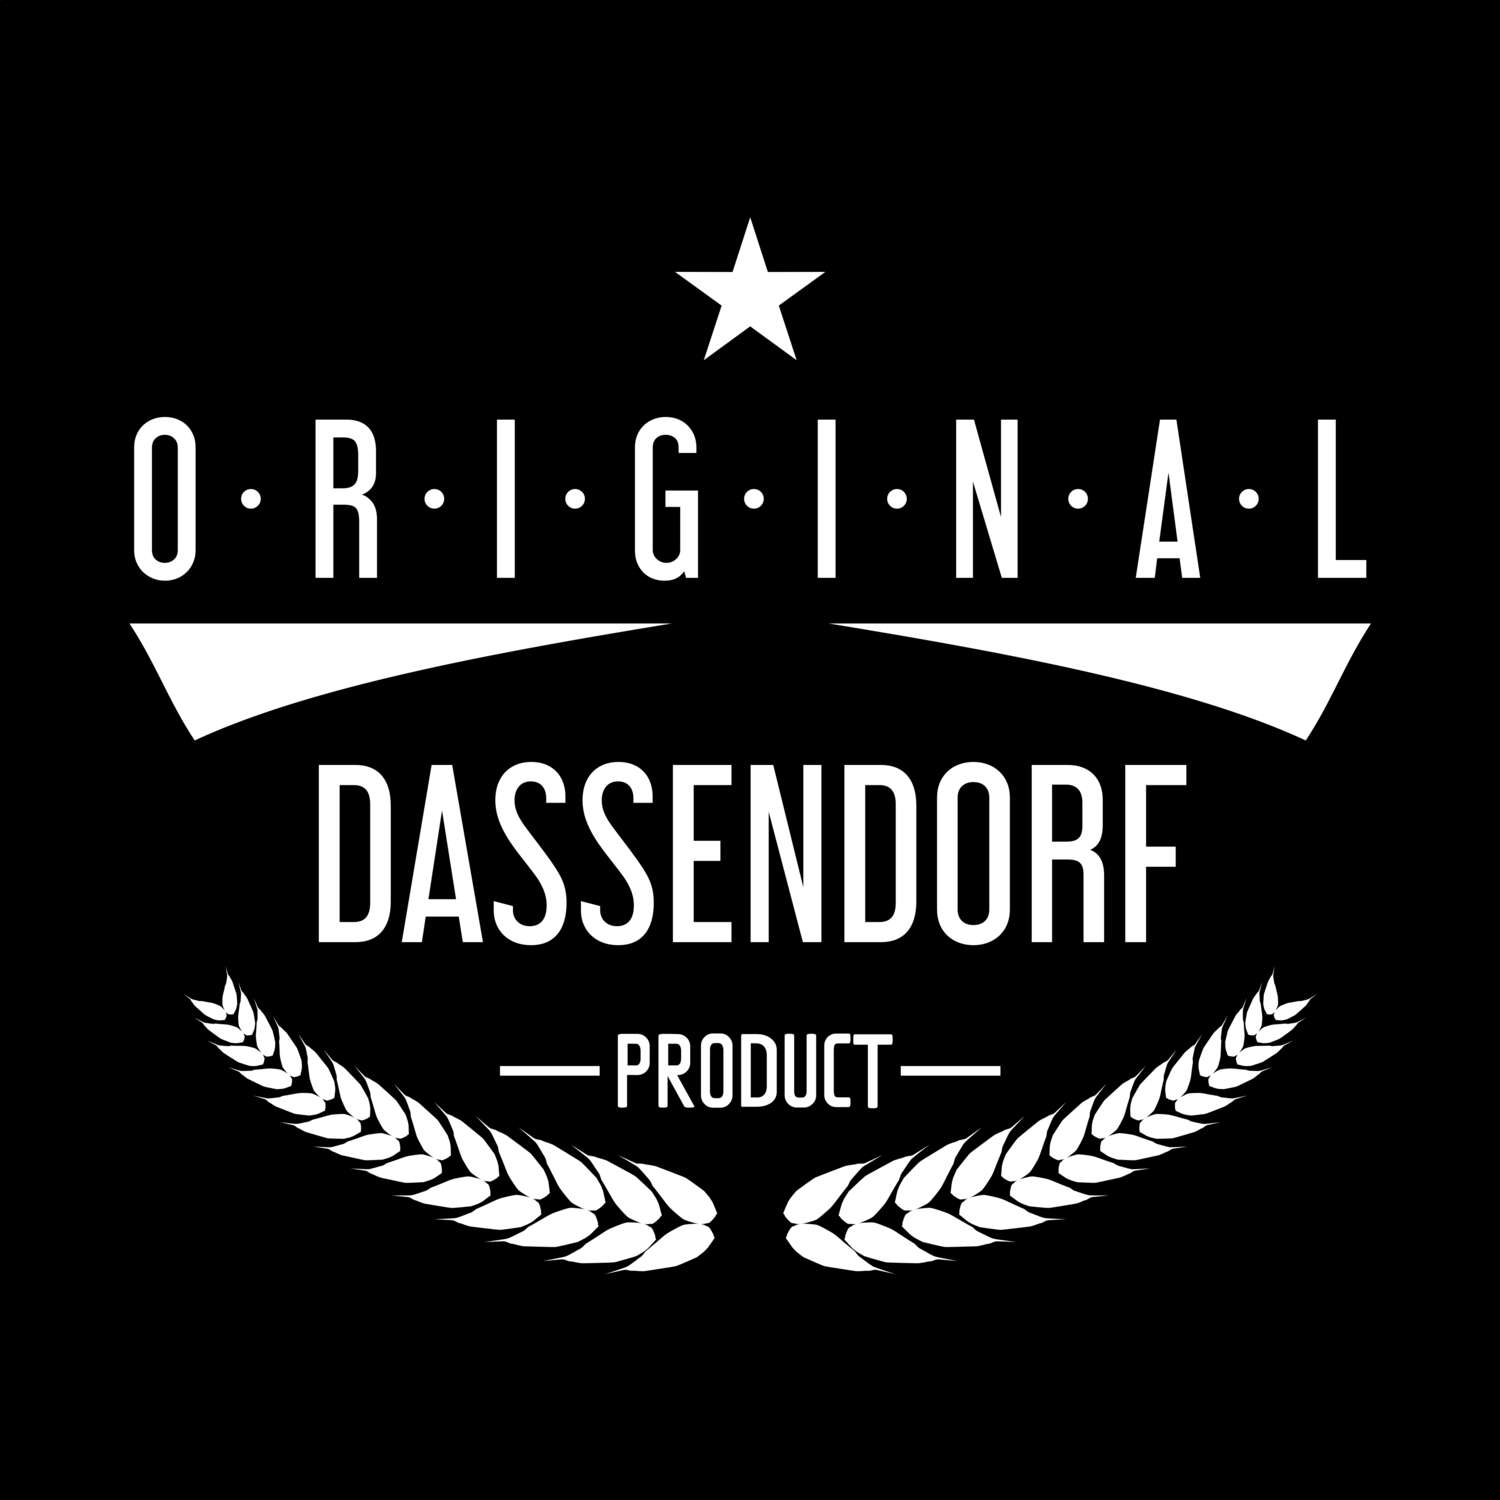 Dassendorf T-Shirt »Original Product«